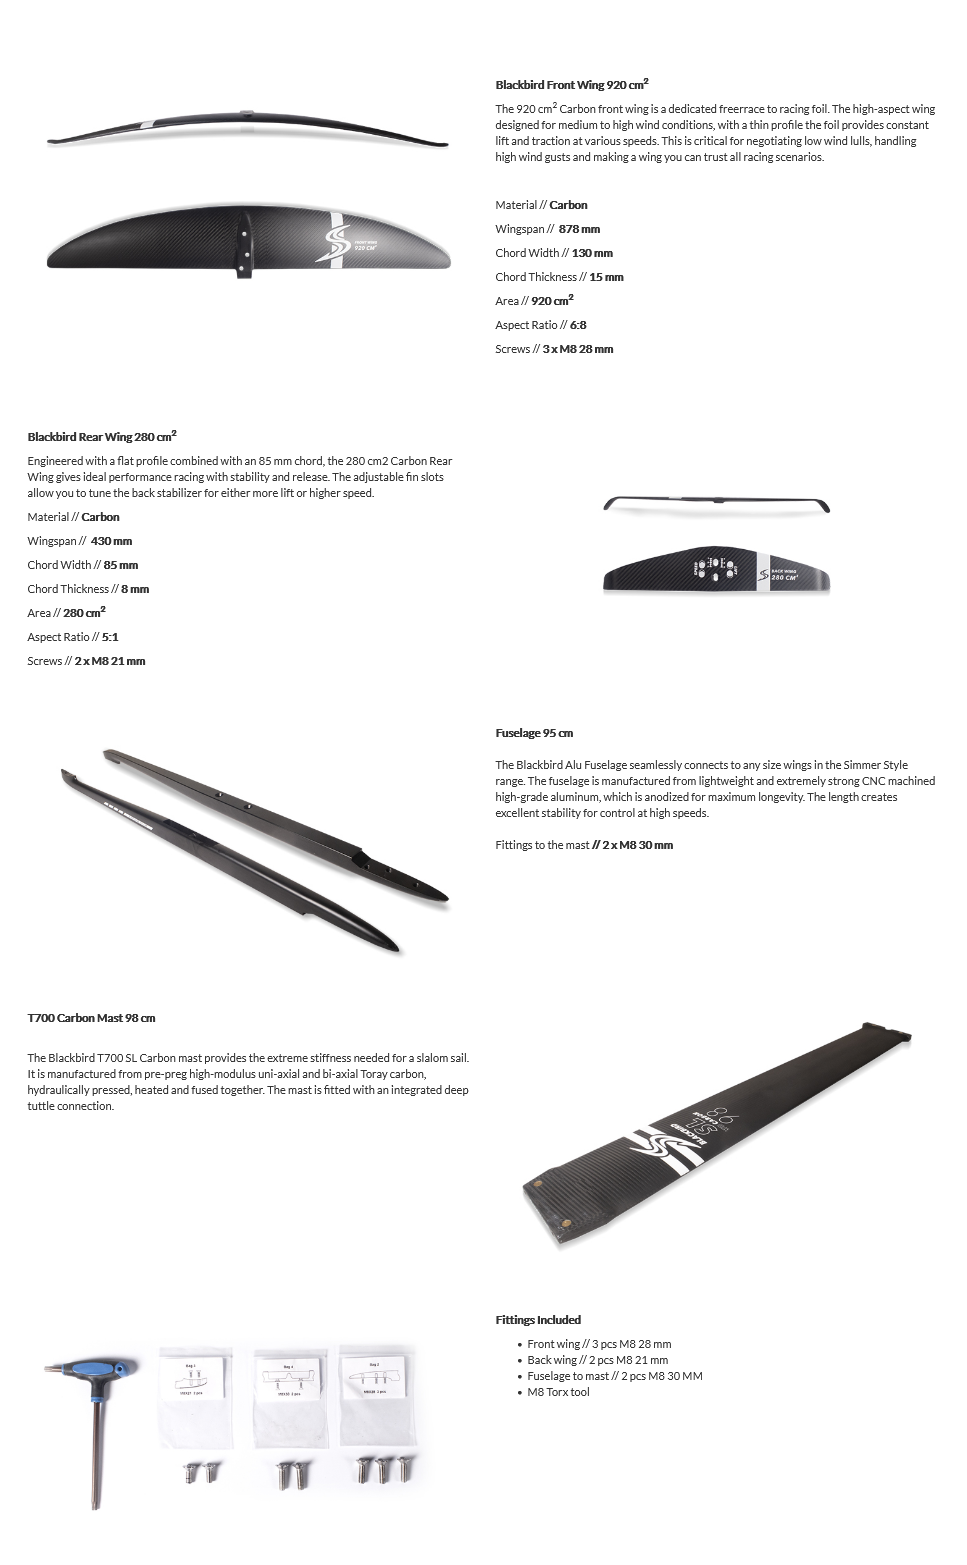 Simmer Style BlackBird SL- Complete Foil - Loopee Windsurfing